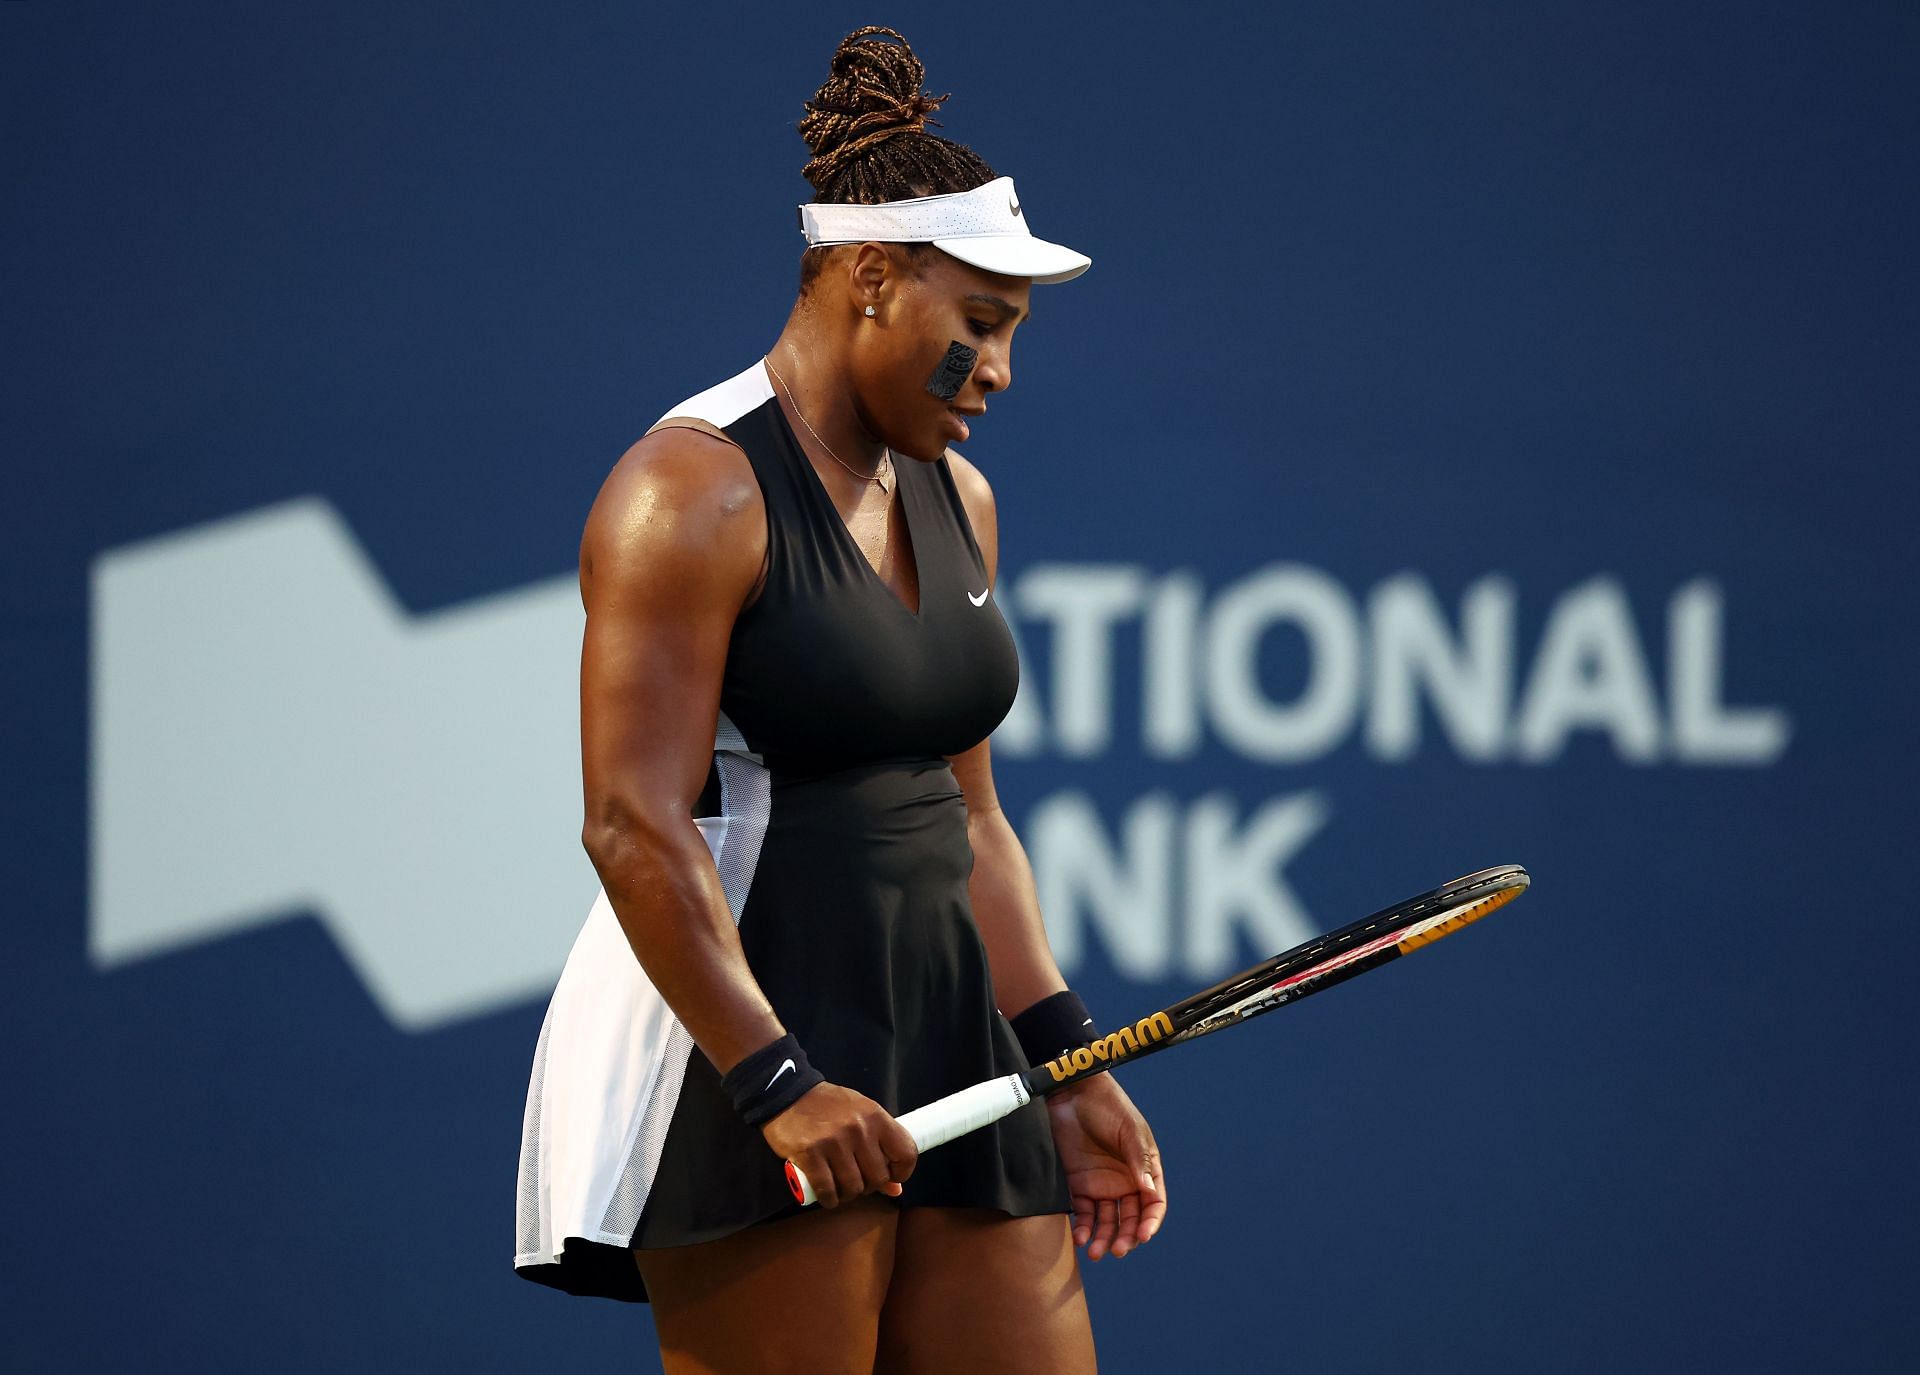 Serena Williams during her match against Belinda Bencic